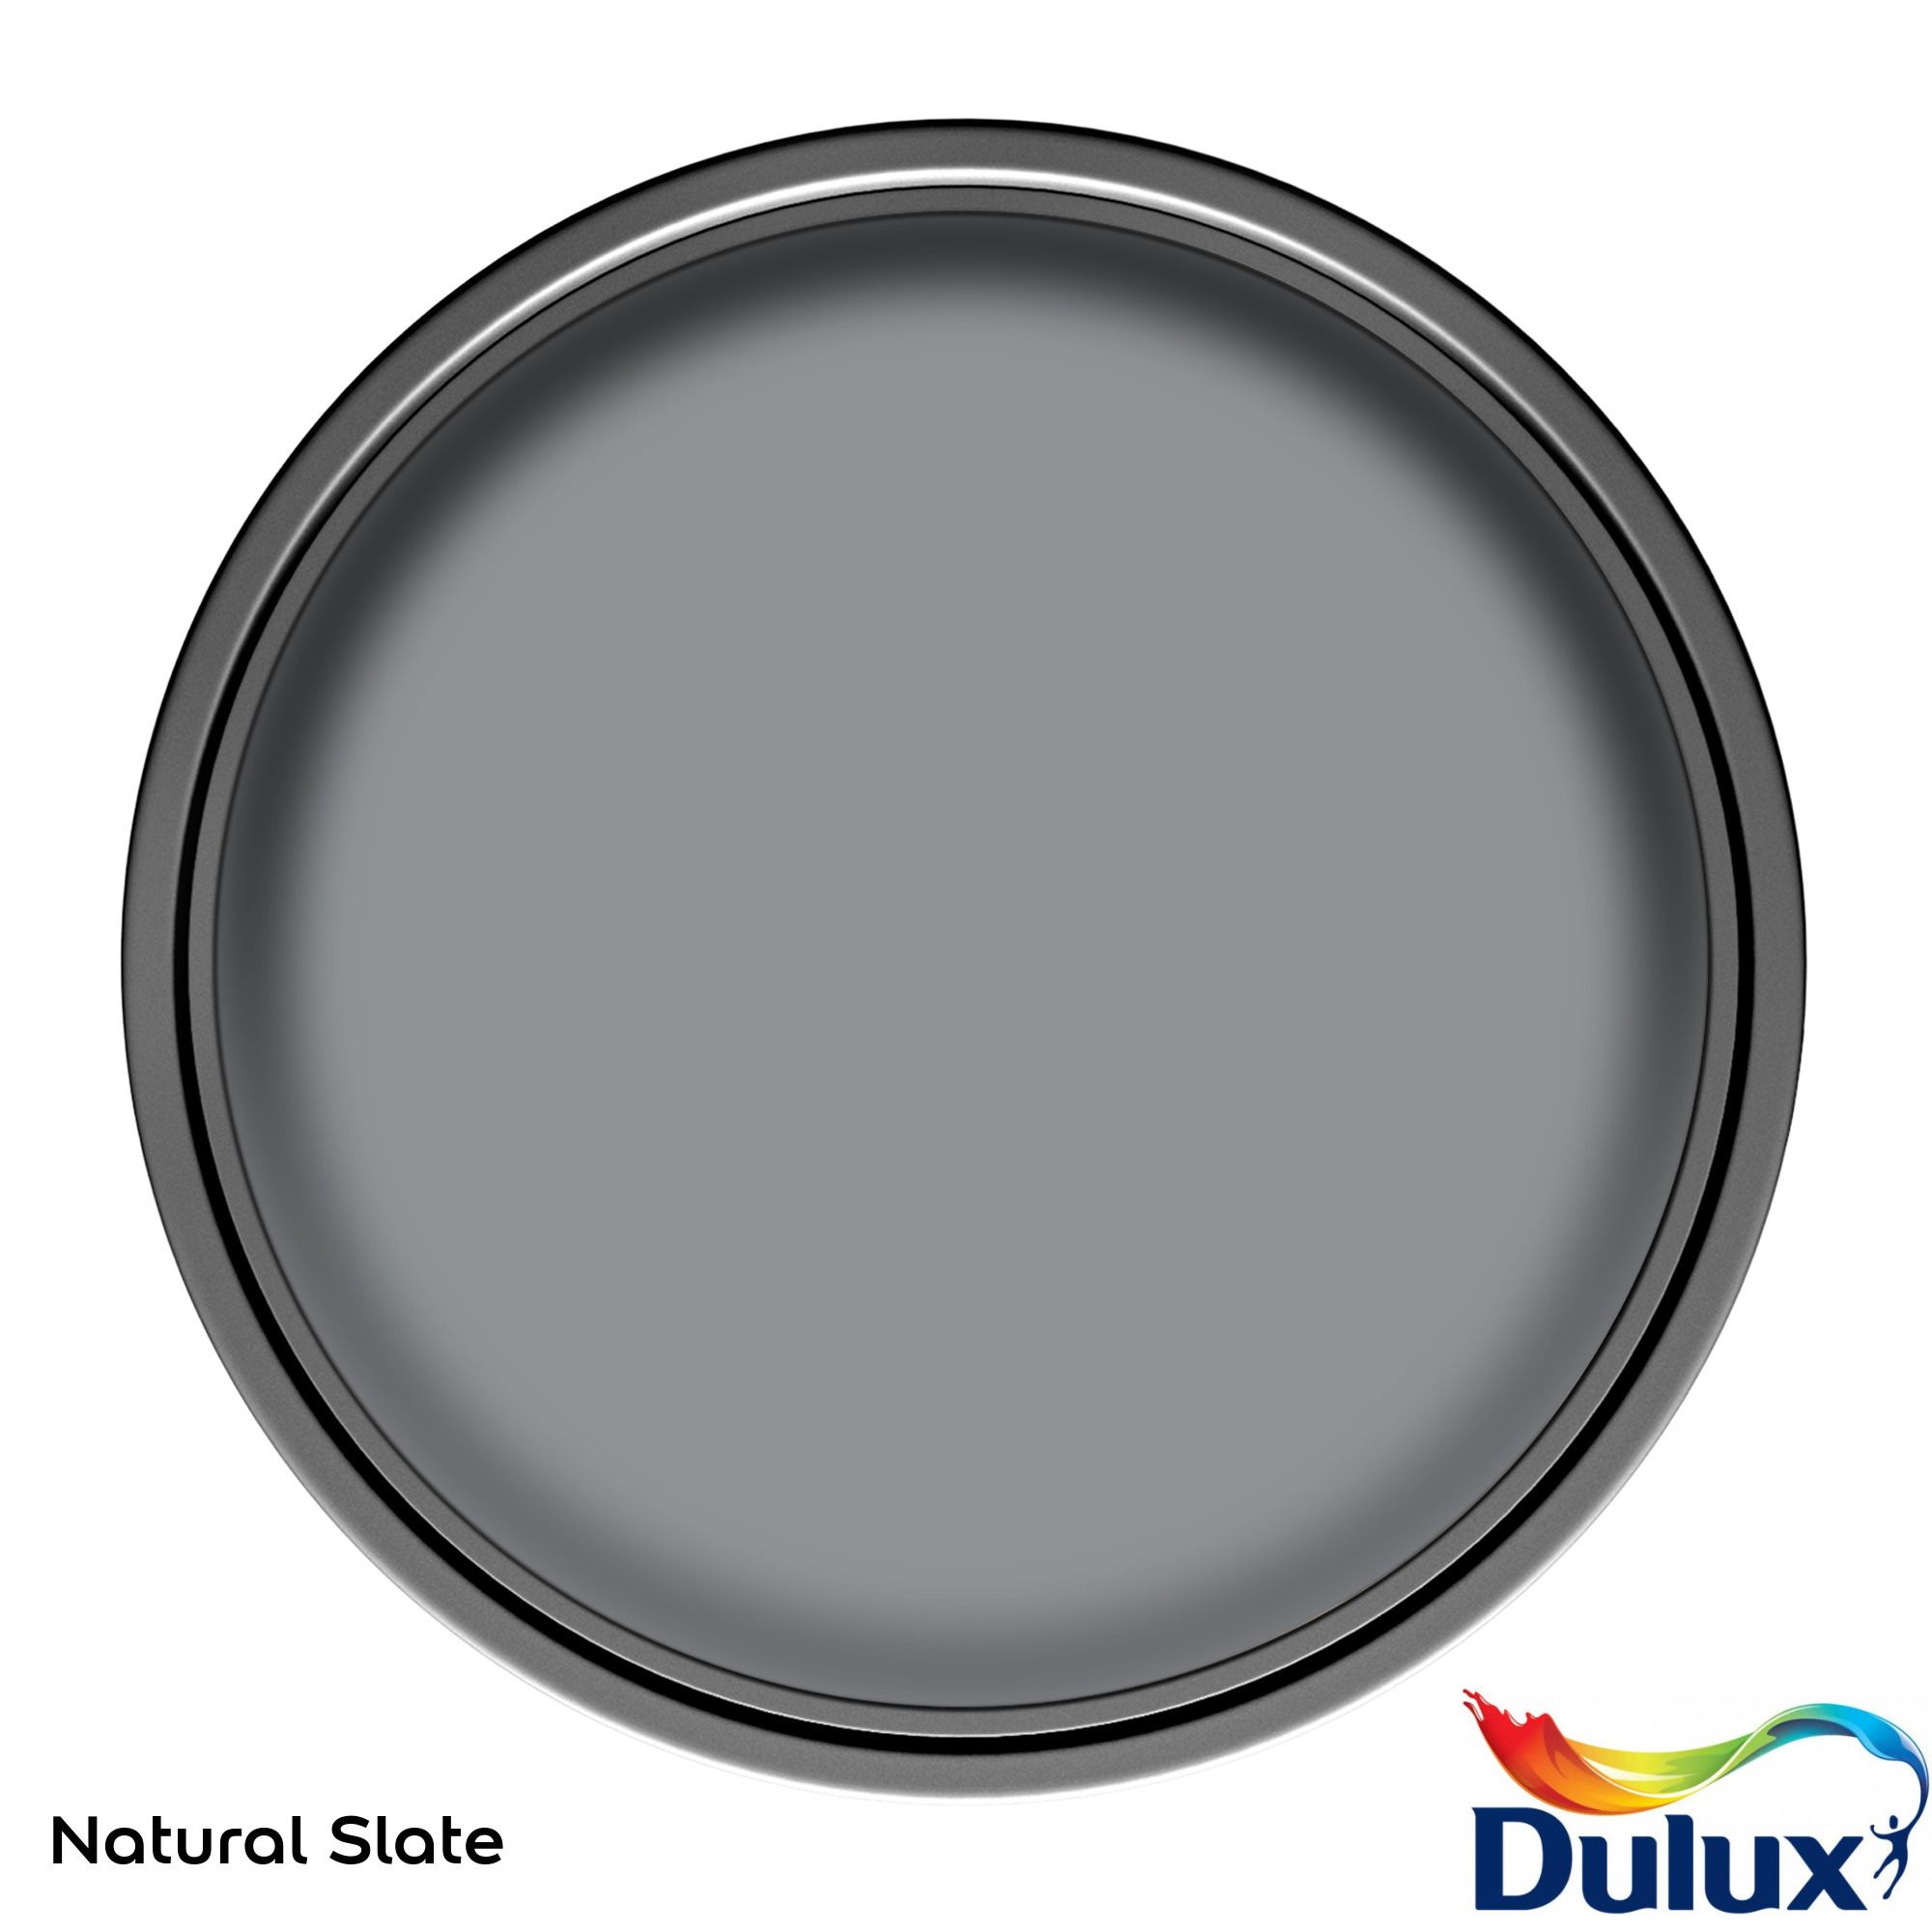 Dulux Easycare Natural Slate Matt Wall paint, 5L